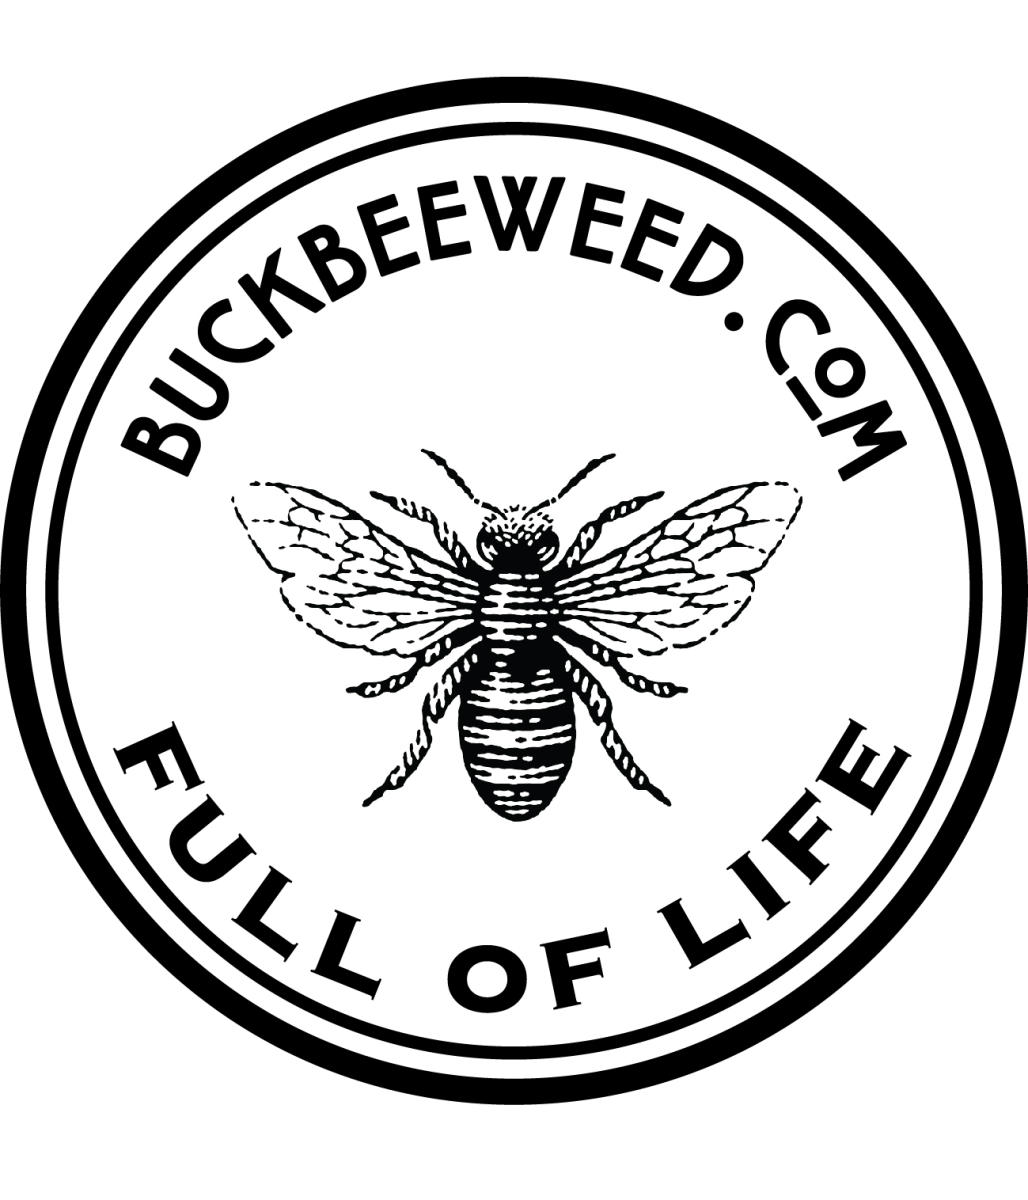 buckbee